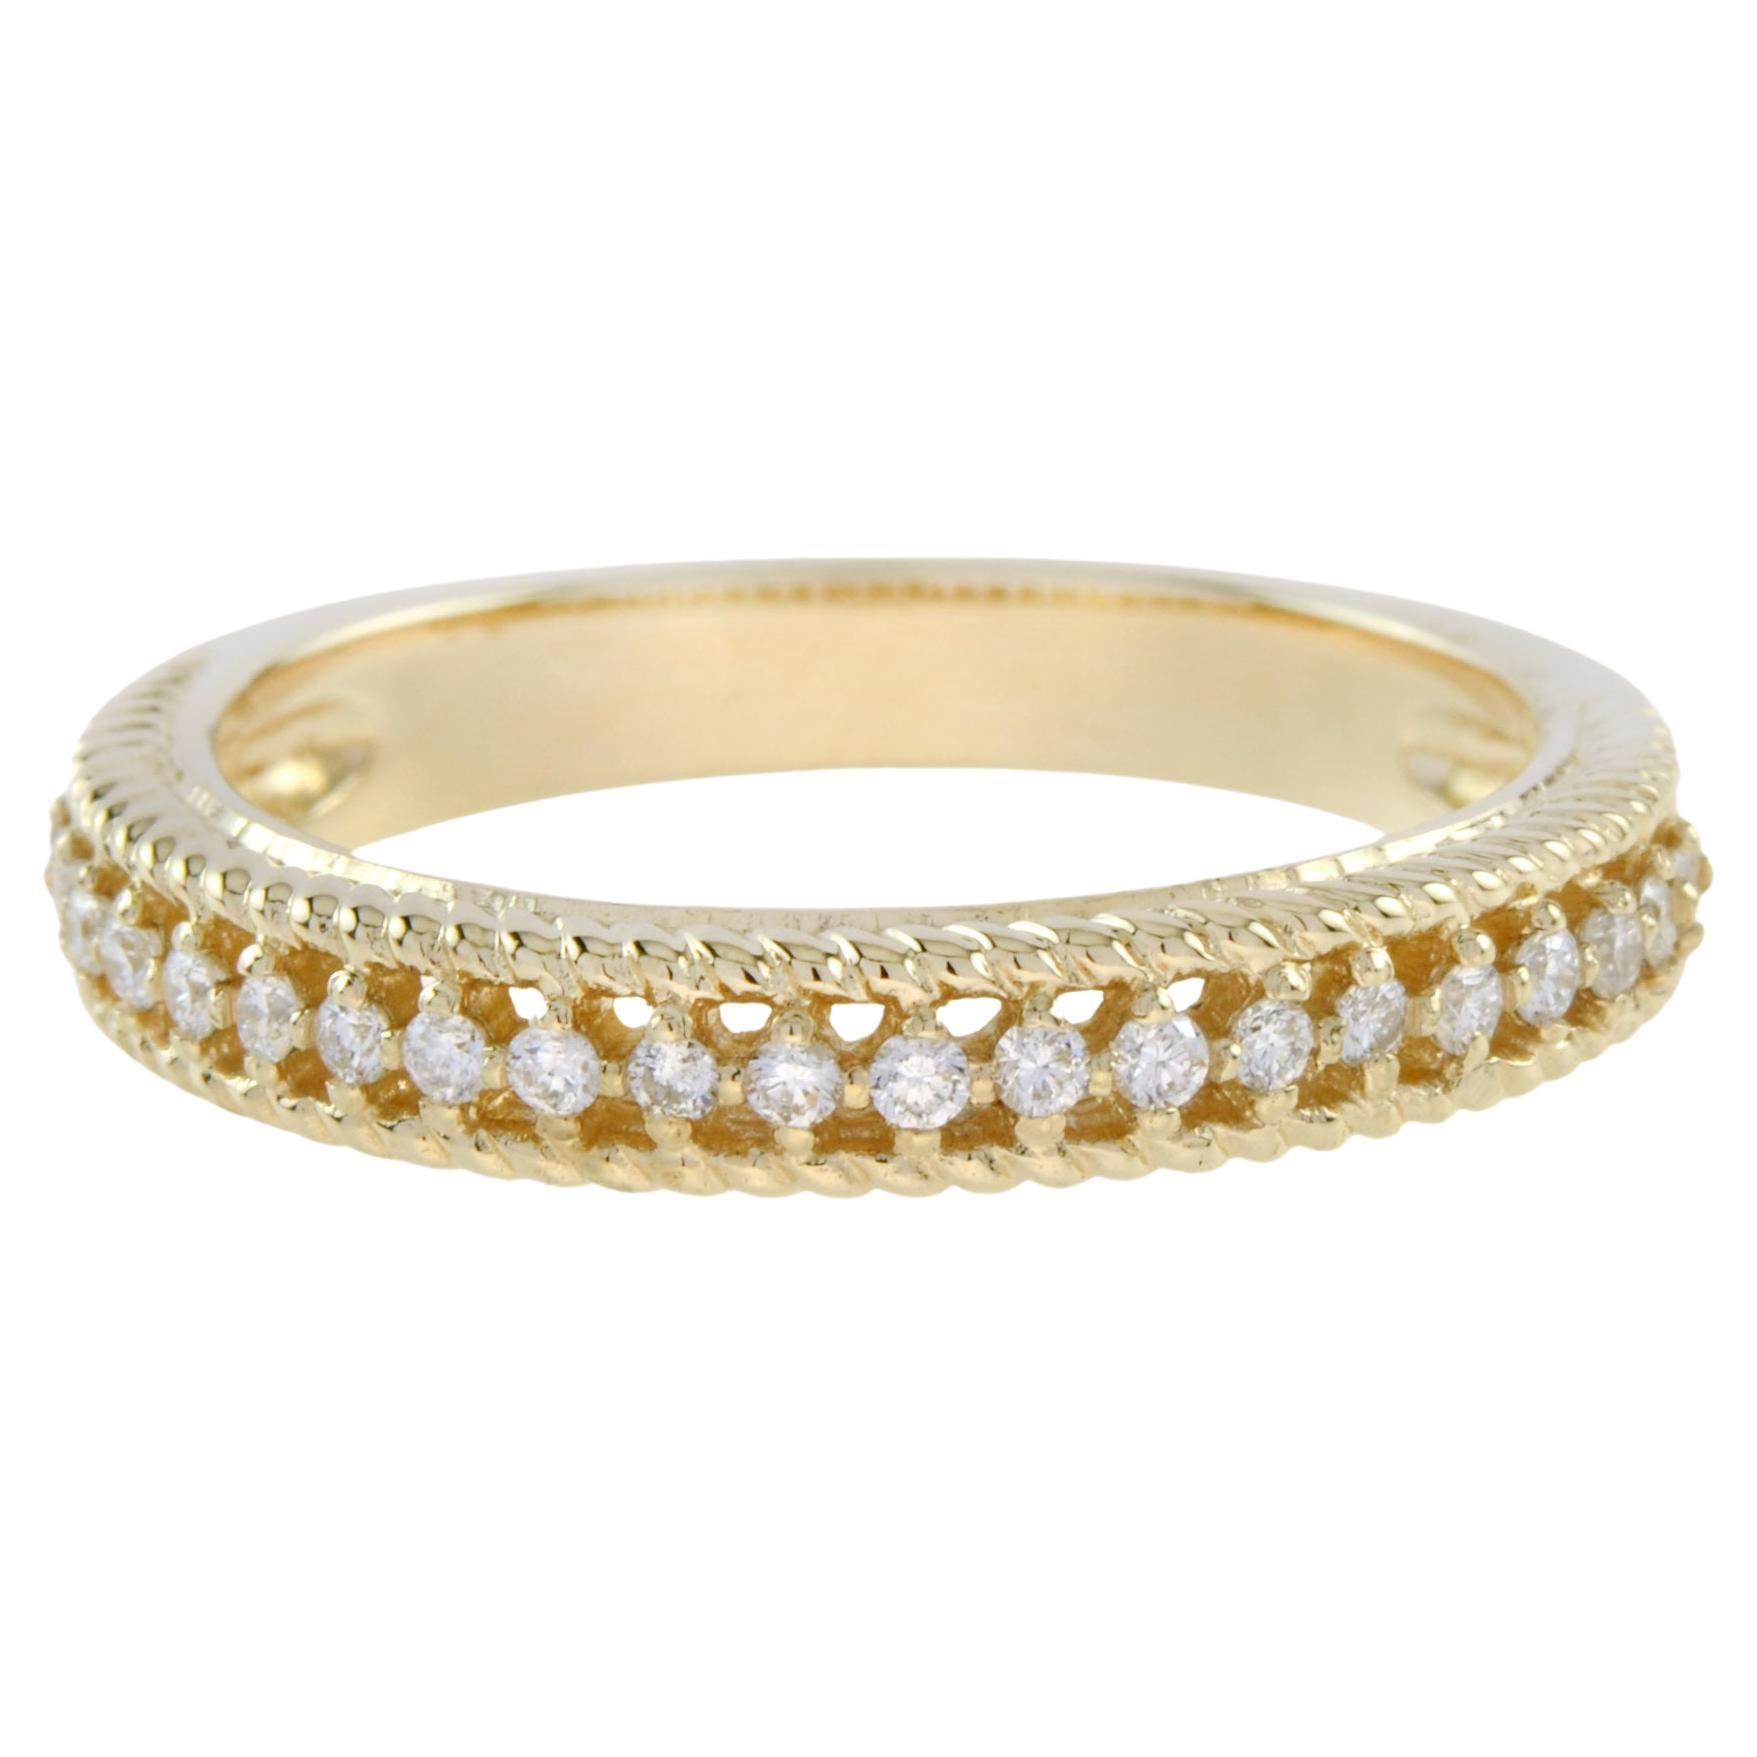 Vintage Style Diamond Half Eternity Wedding Band Ring in 14K Yellow Gold